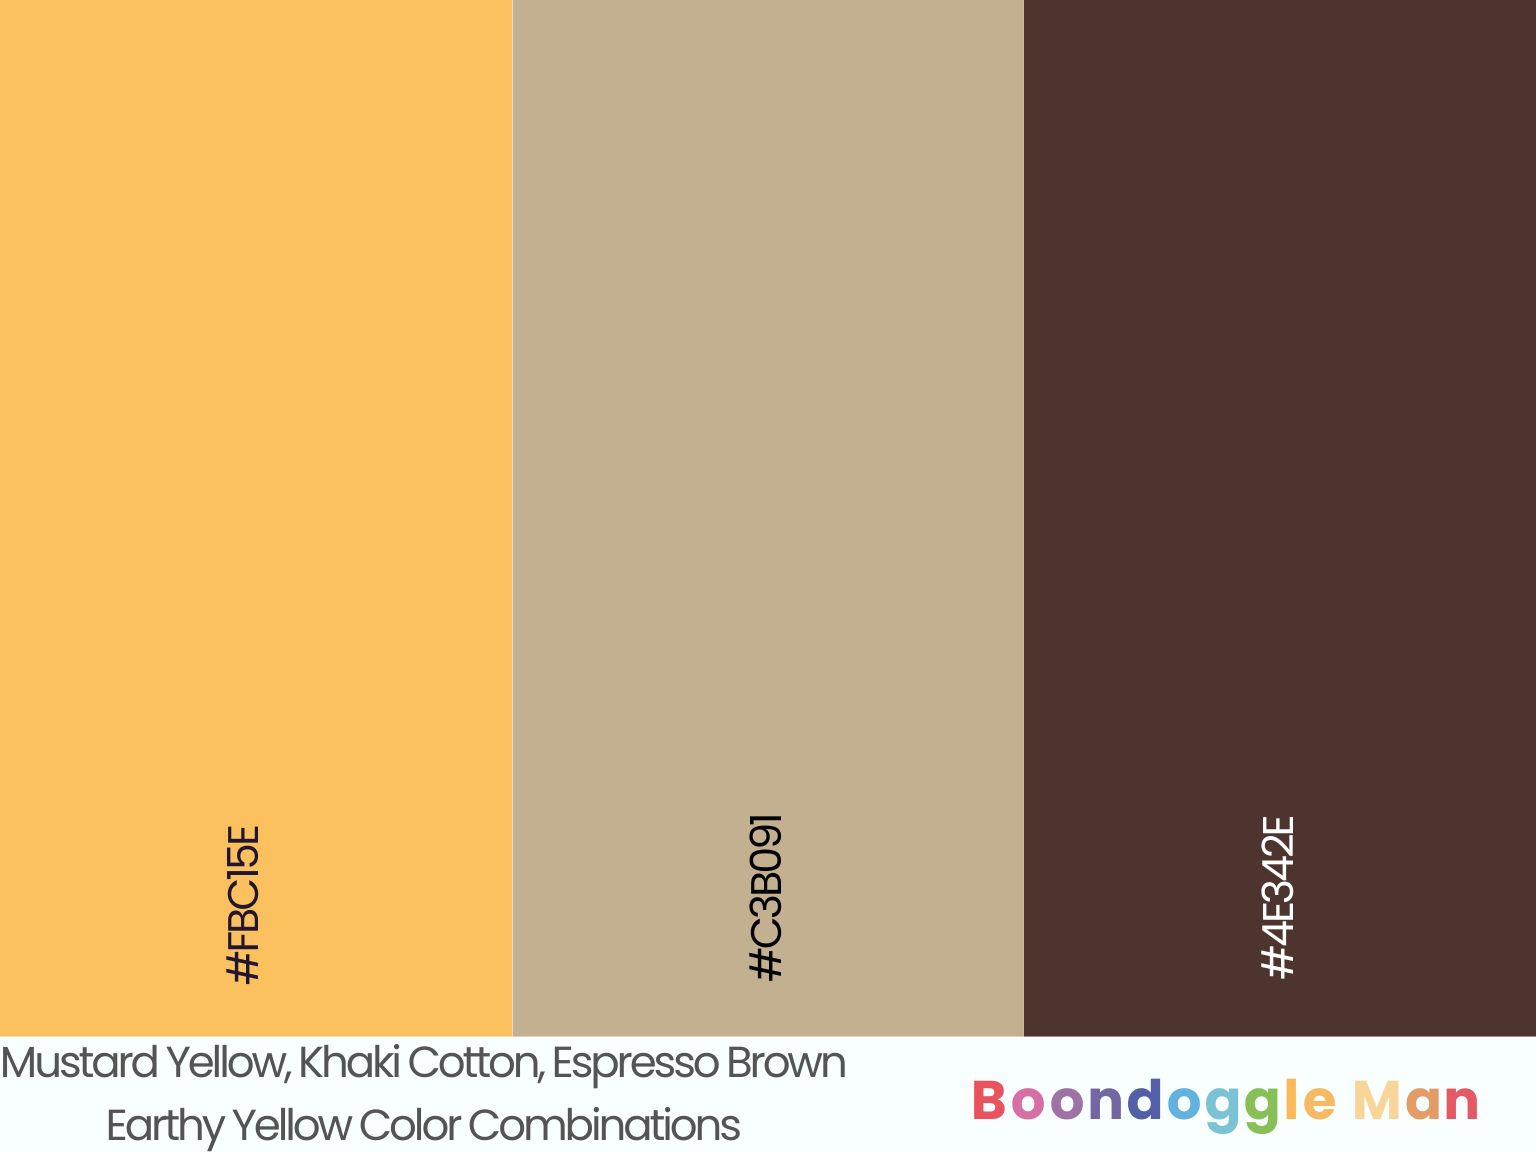 Mustard Yellow, Khaki Cotton, Espresso Brown